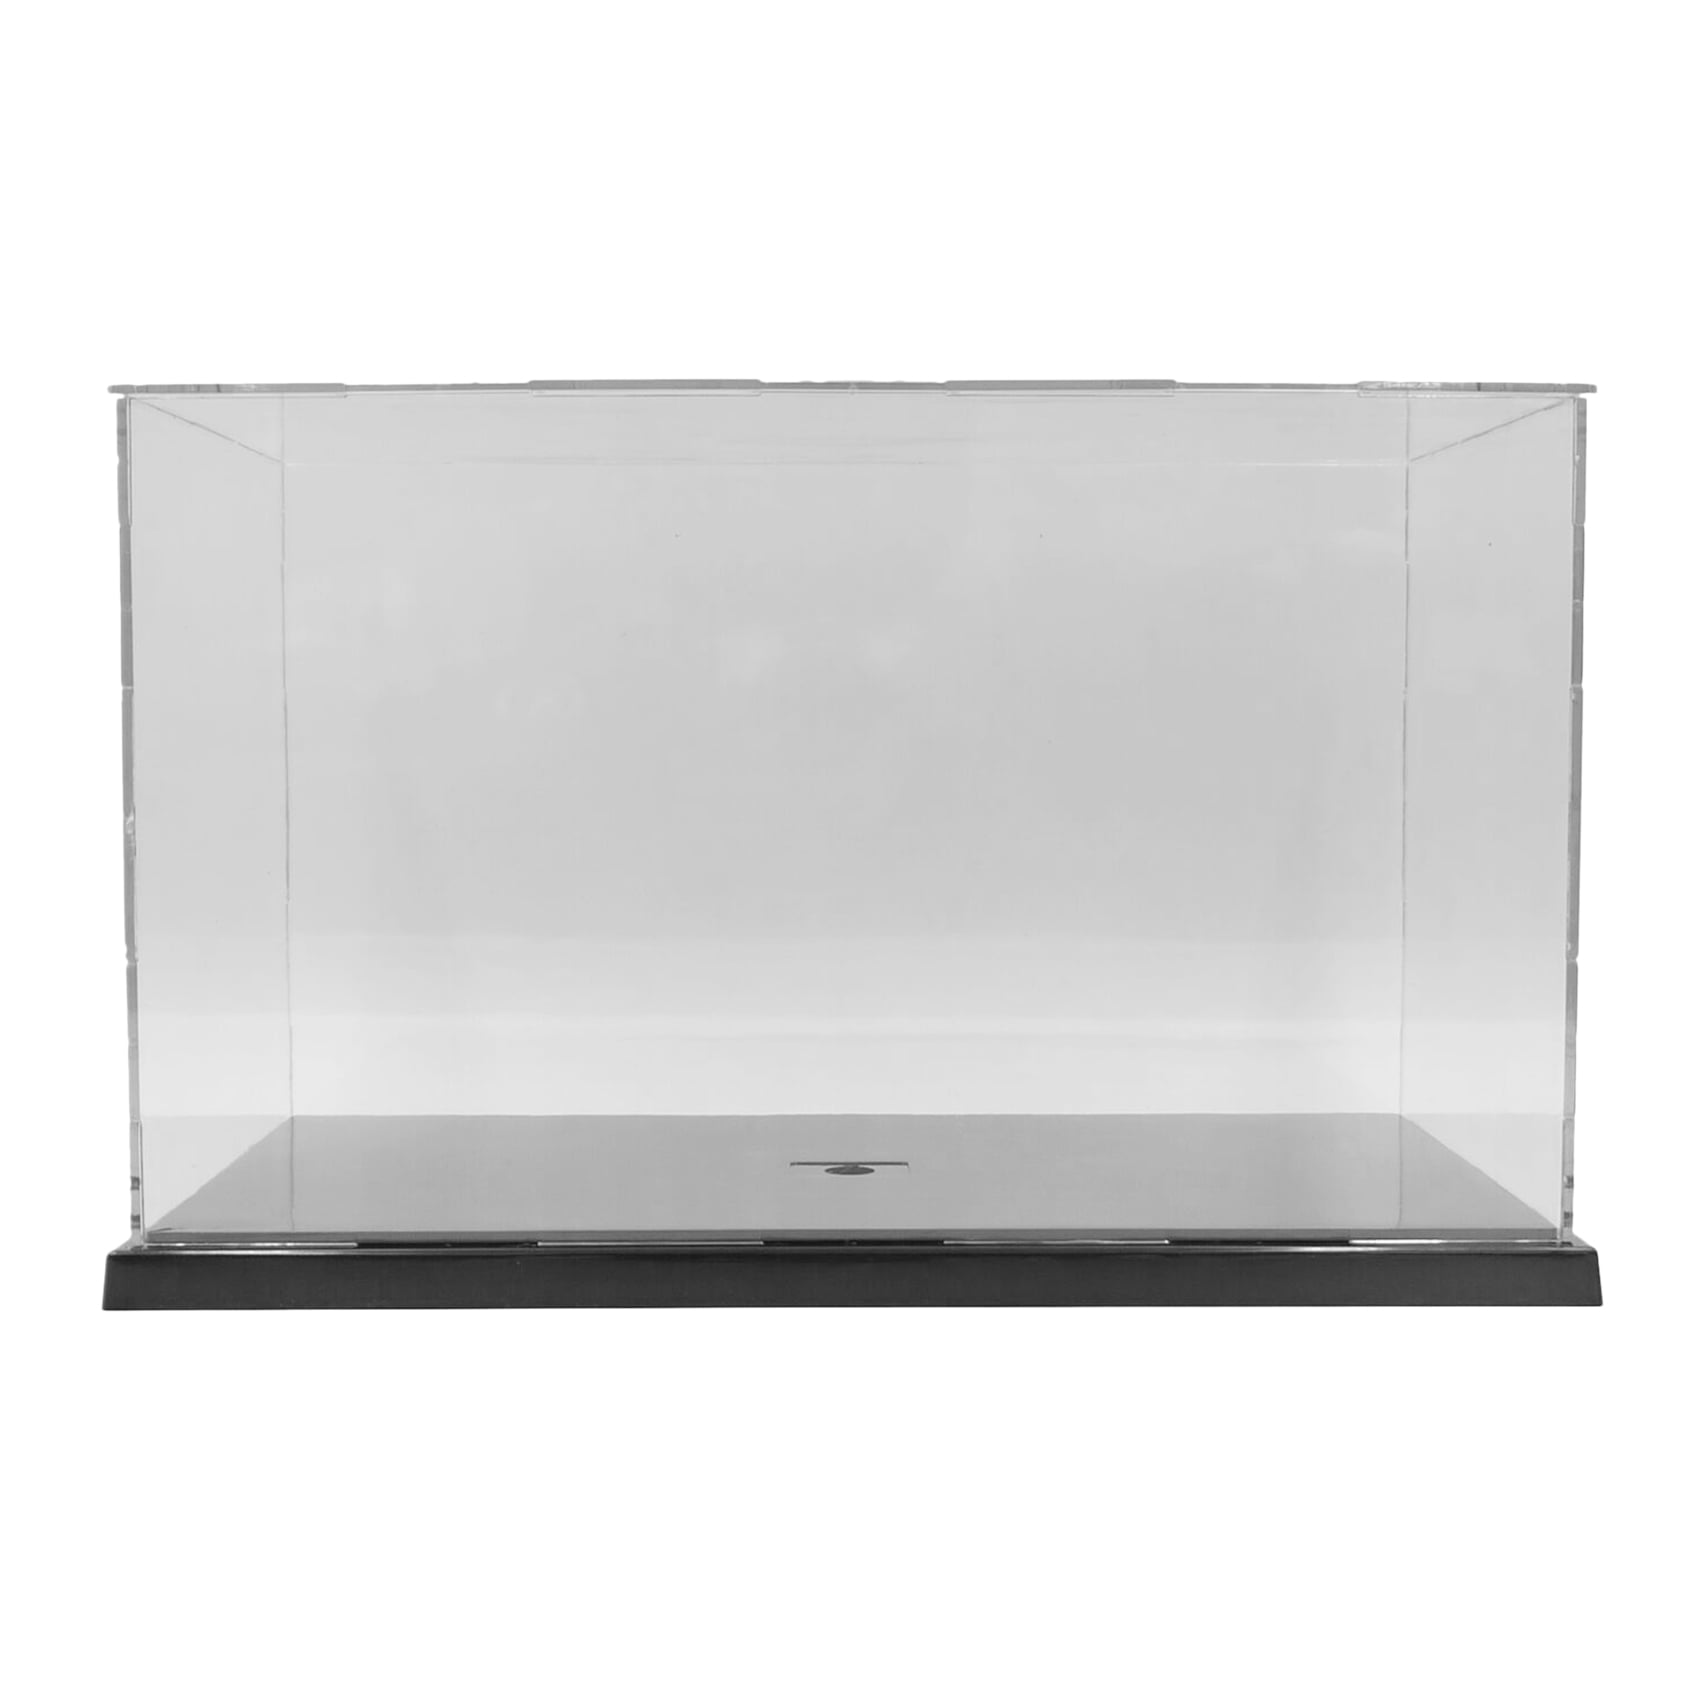 Transparent Dustproof Protection Show Case Display Showcase 31x17x19cm 